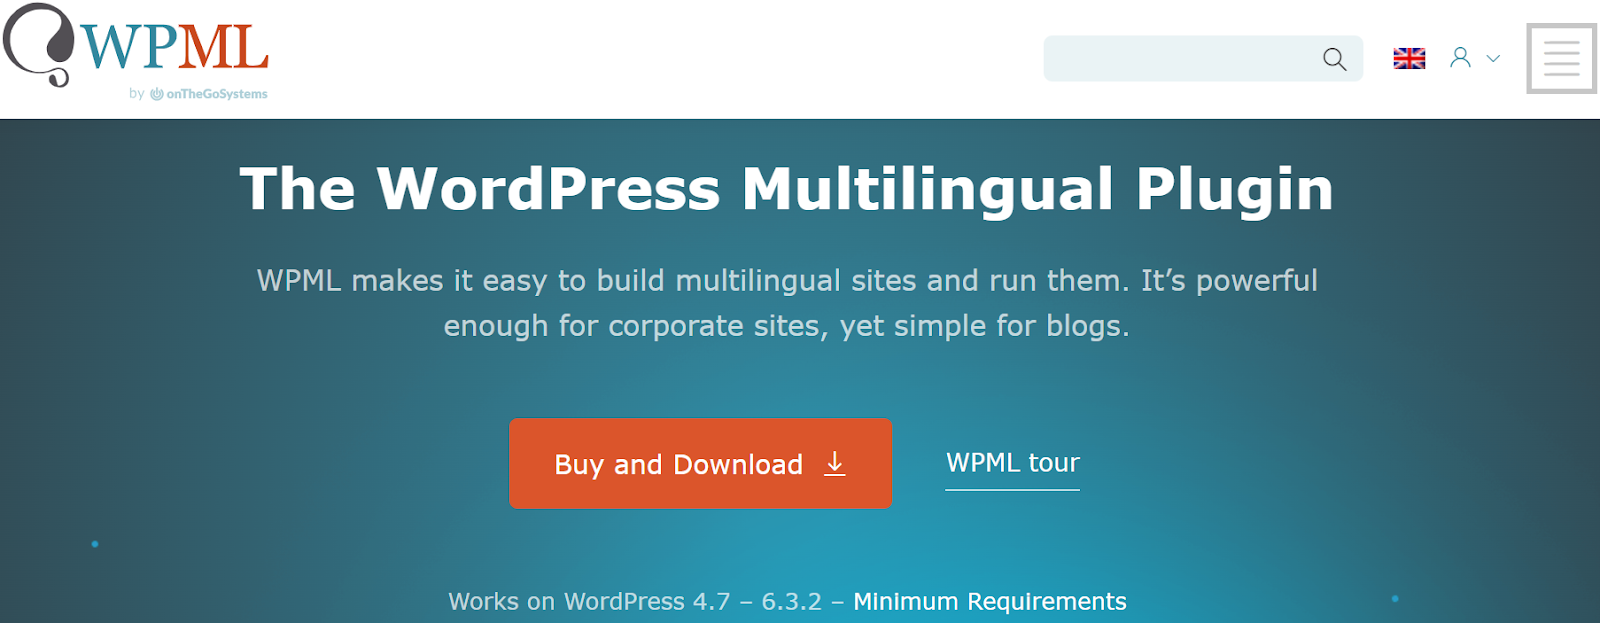 WPML homepage